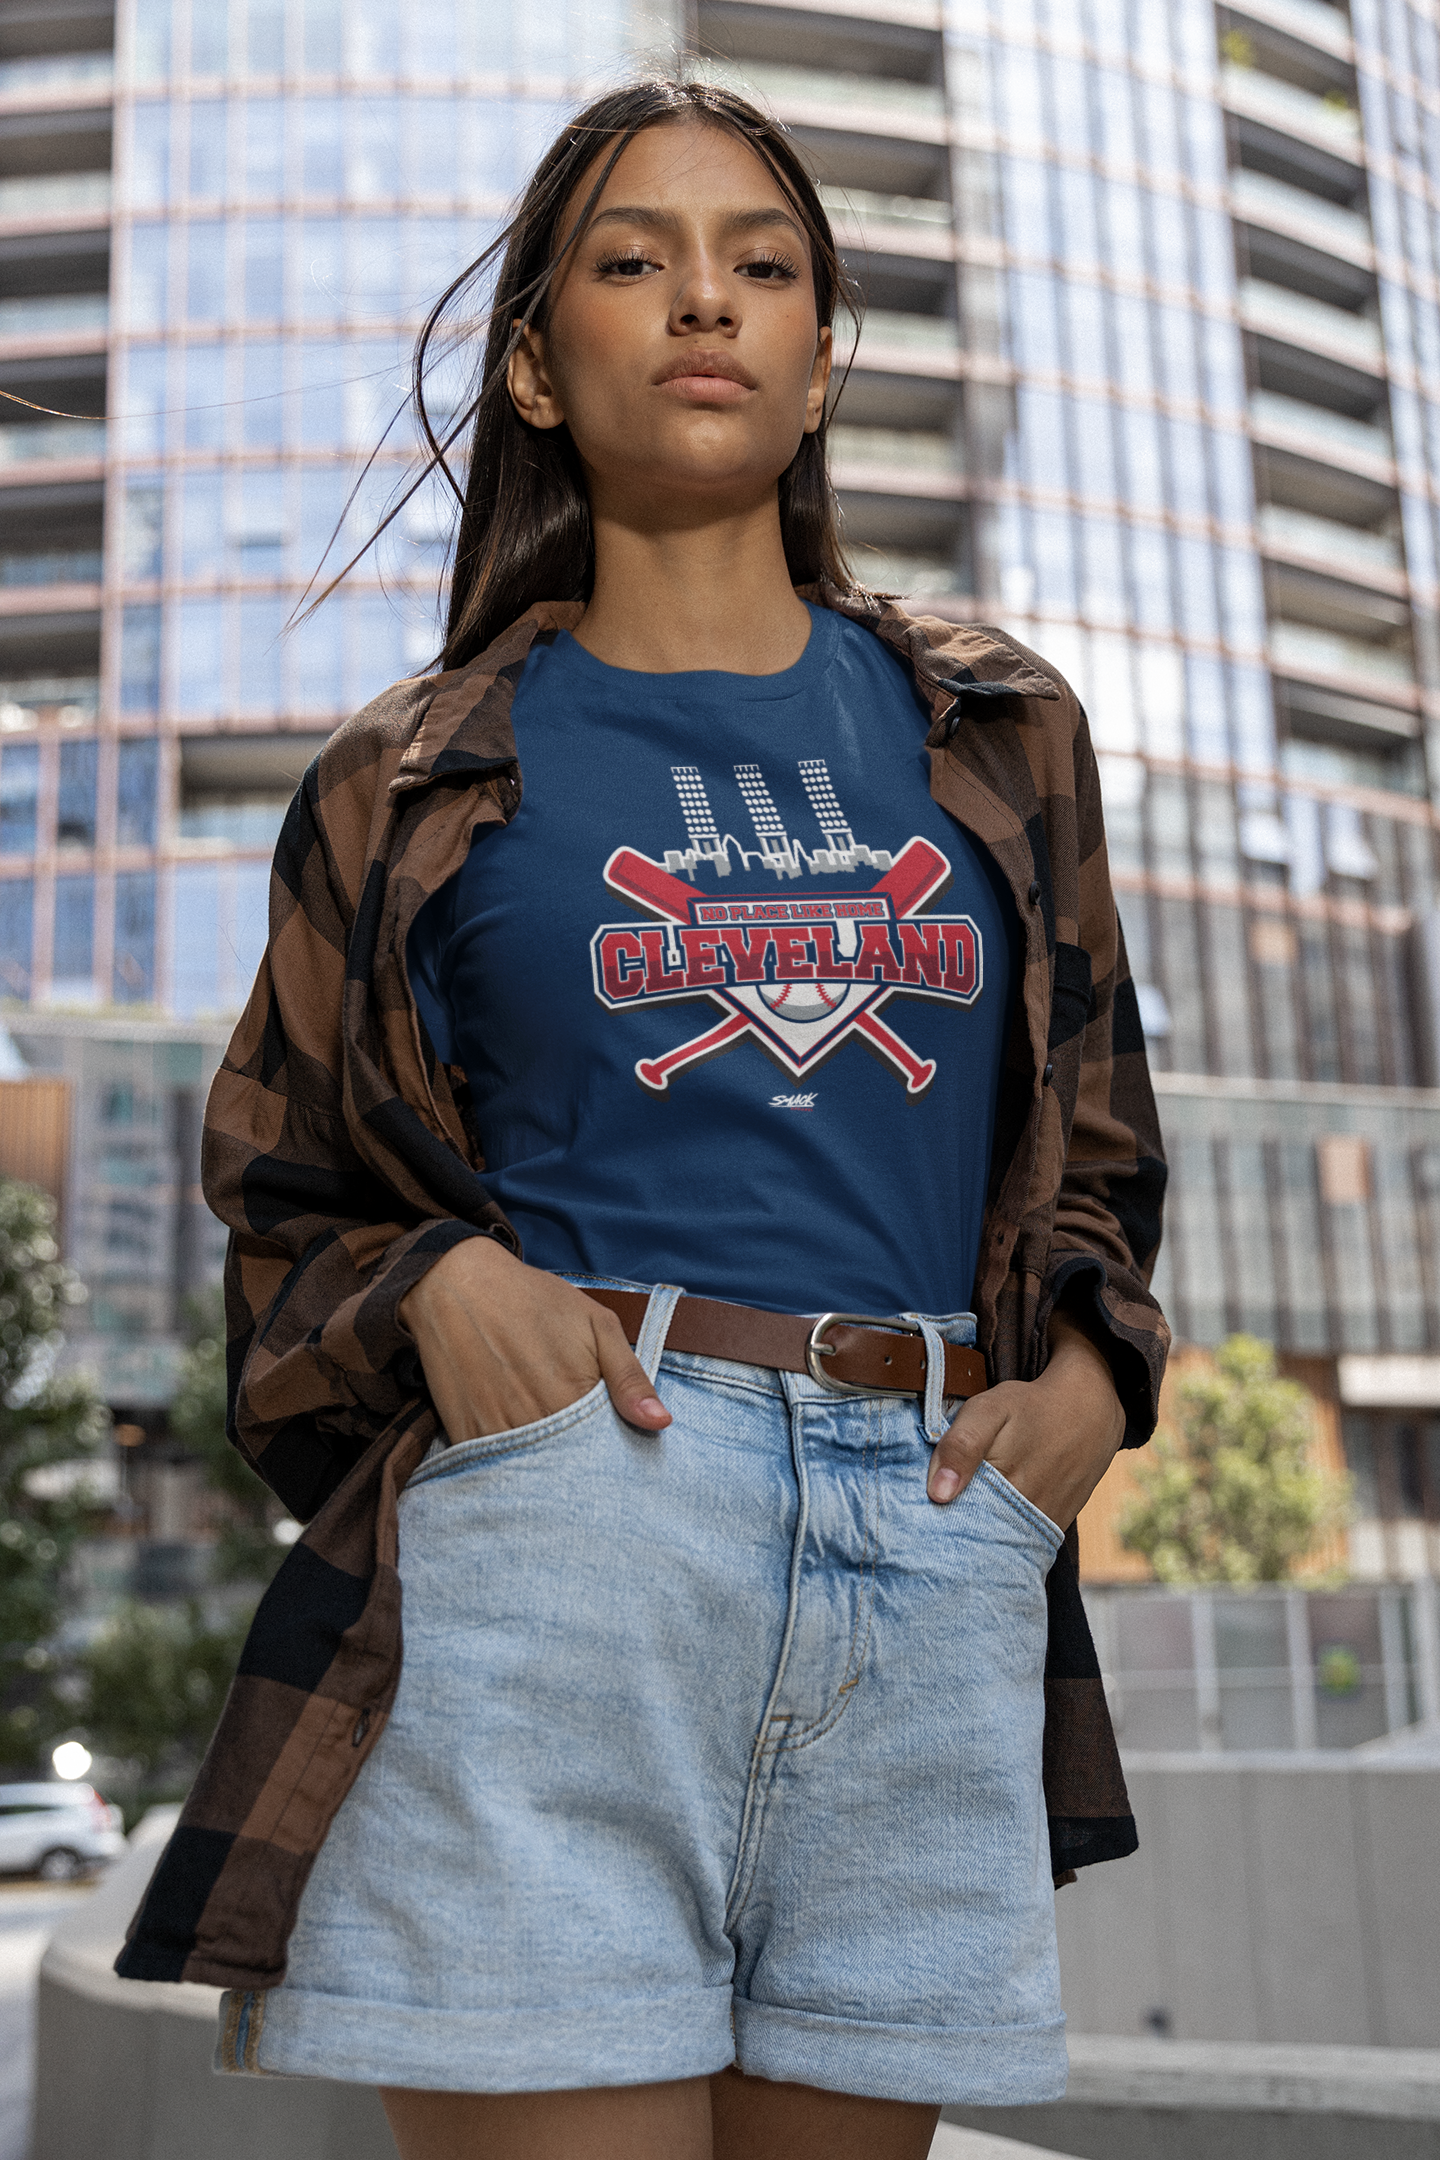 Chicago Baseball Fans. No Place Like Home Royal T-Shirt (Sm-5X)